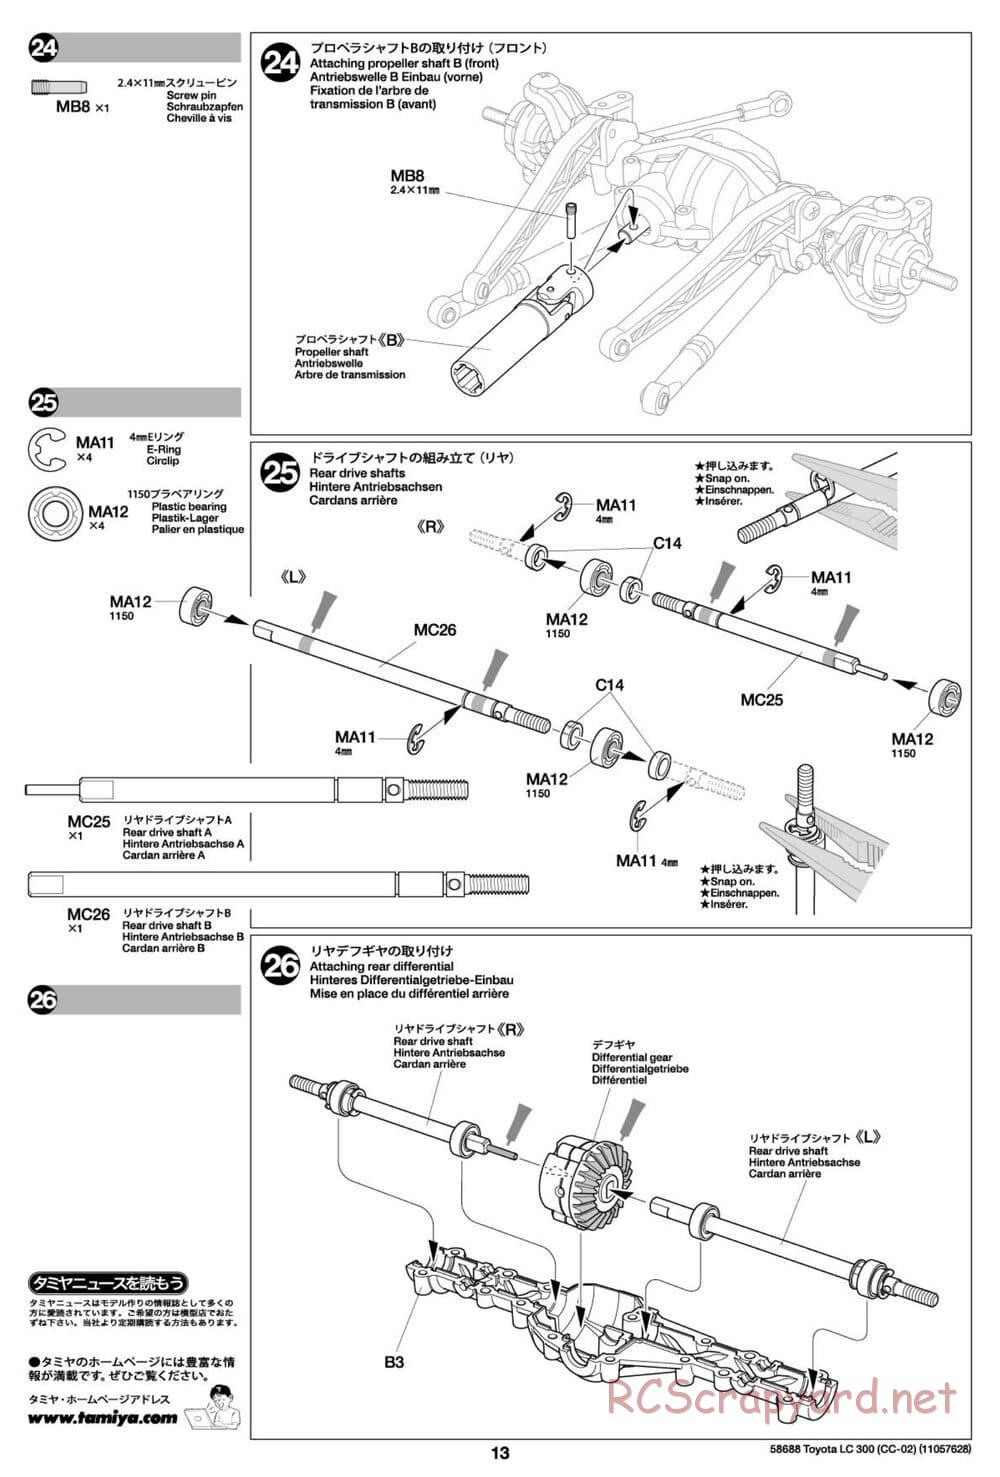 Tamiya - Toyota Land Cruiser 300 - CC-02 Chassis - Manual - Page 13